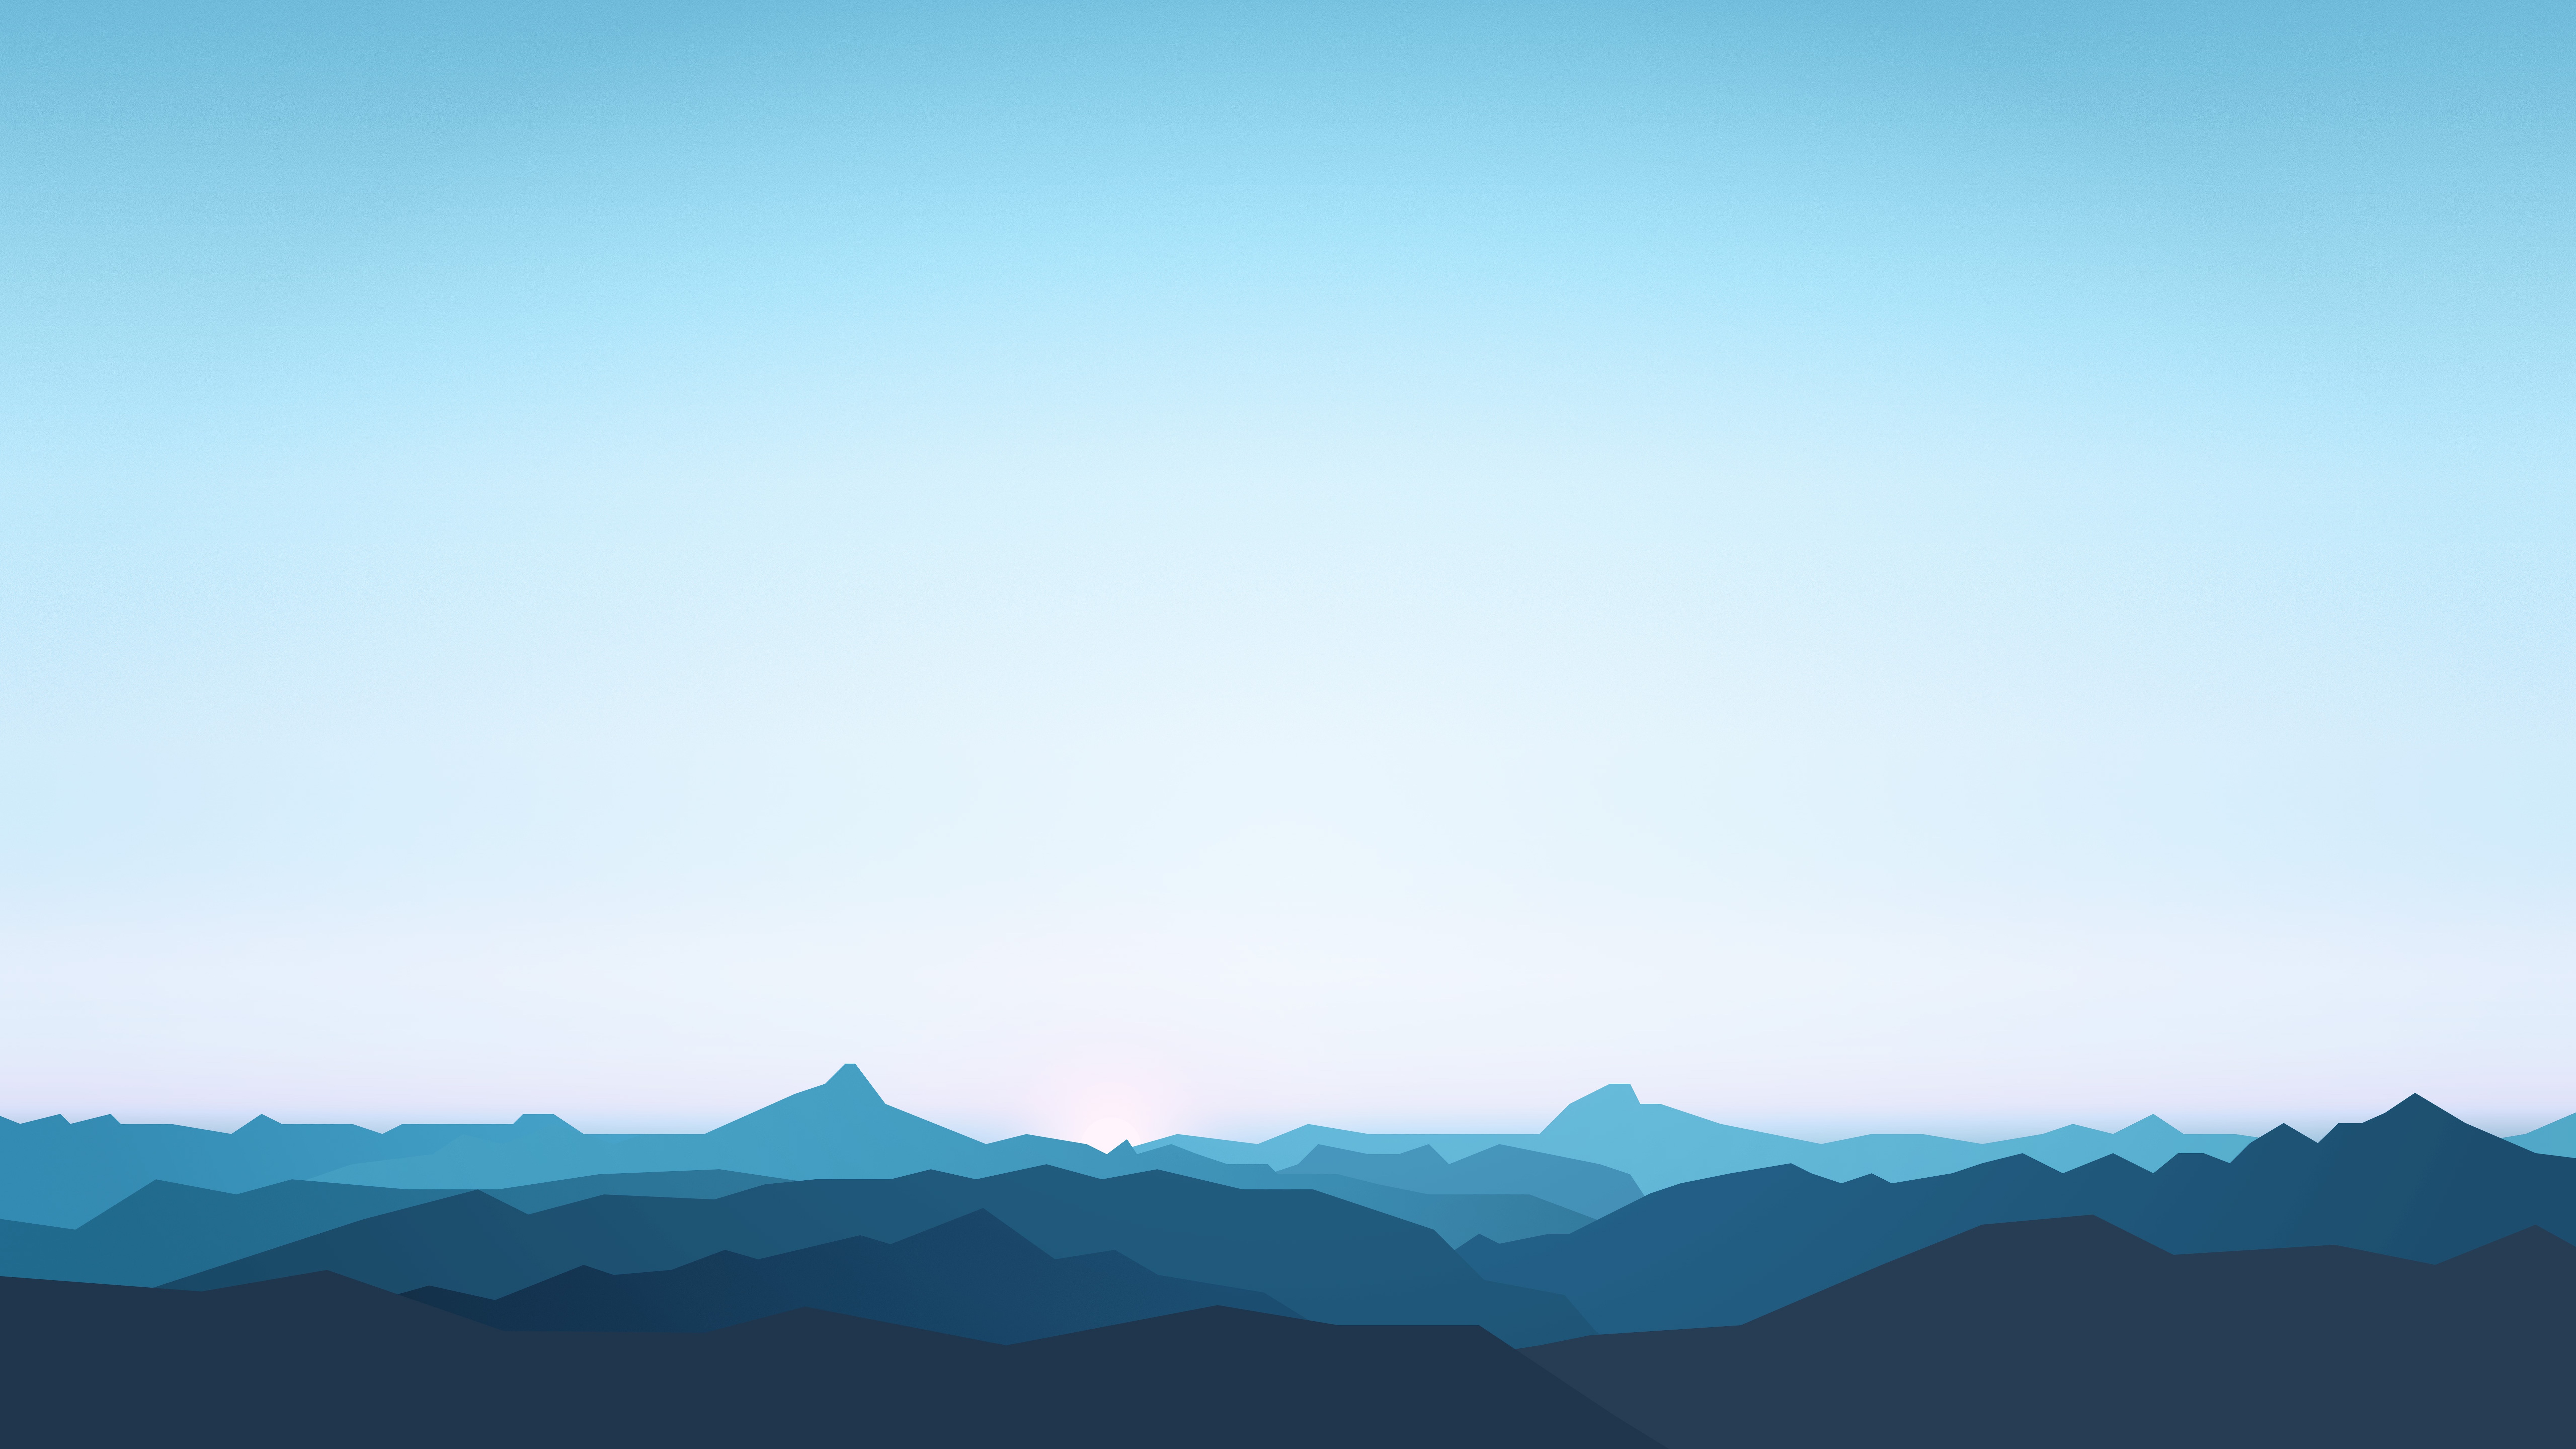 General 7680x4320 artwork minimalism mountains mist sky blue blue background